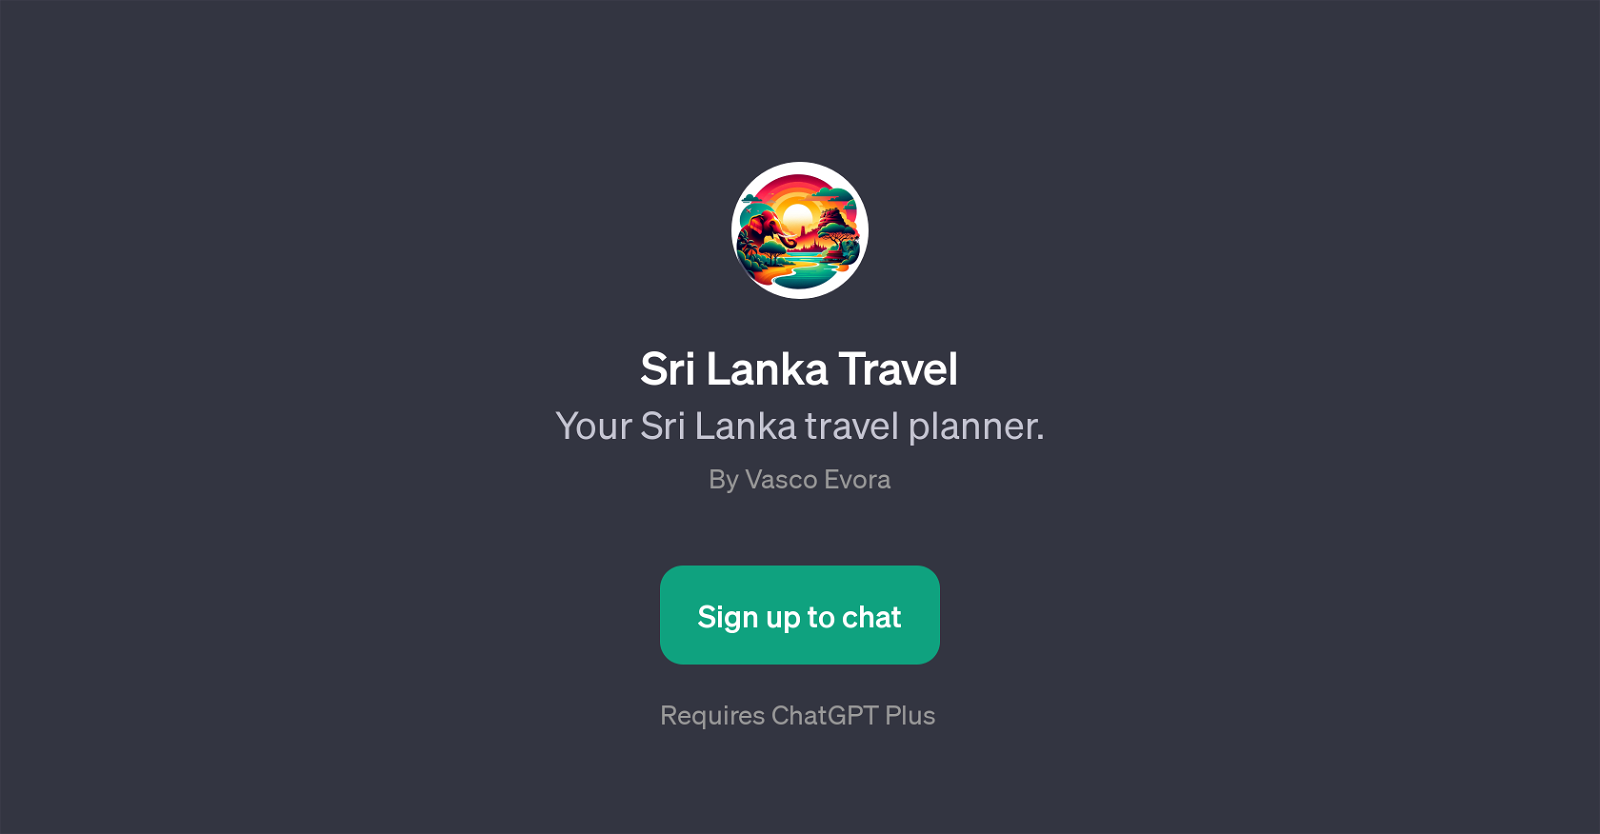 Sri Lanka Travel website